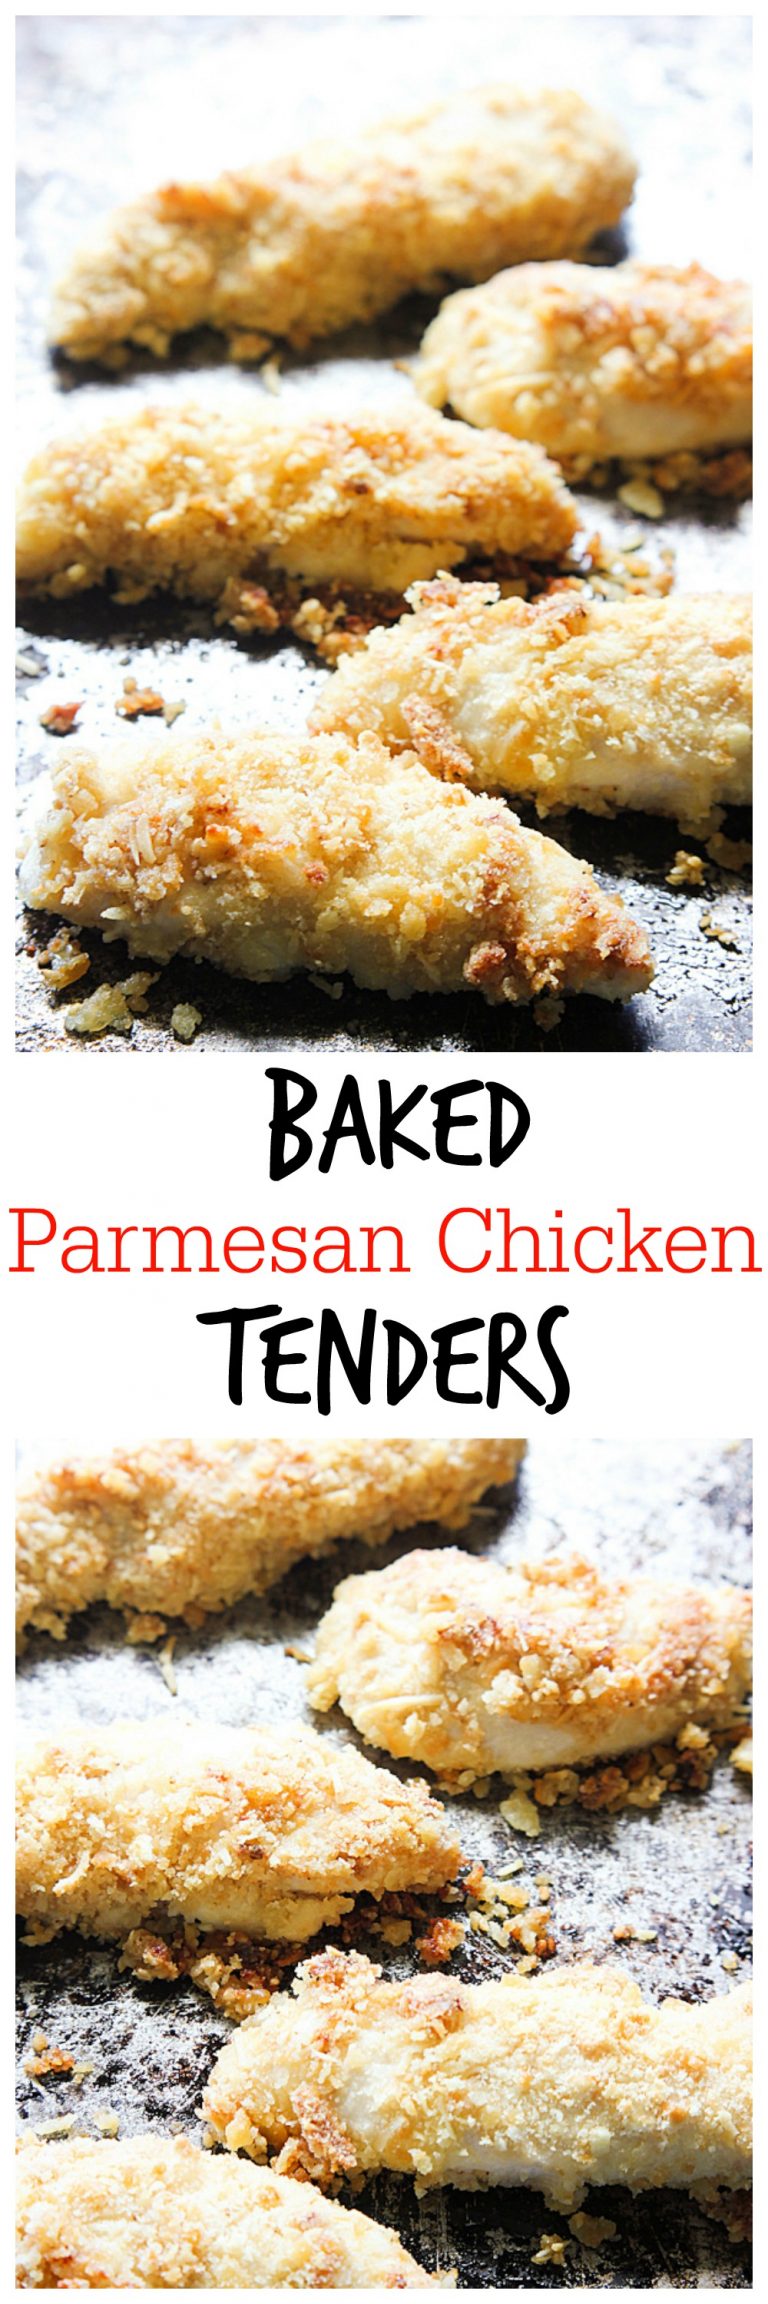 Baked Parmesan Chicken Tenders | Mandy's Recipe Box